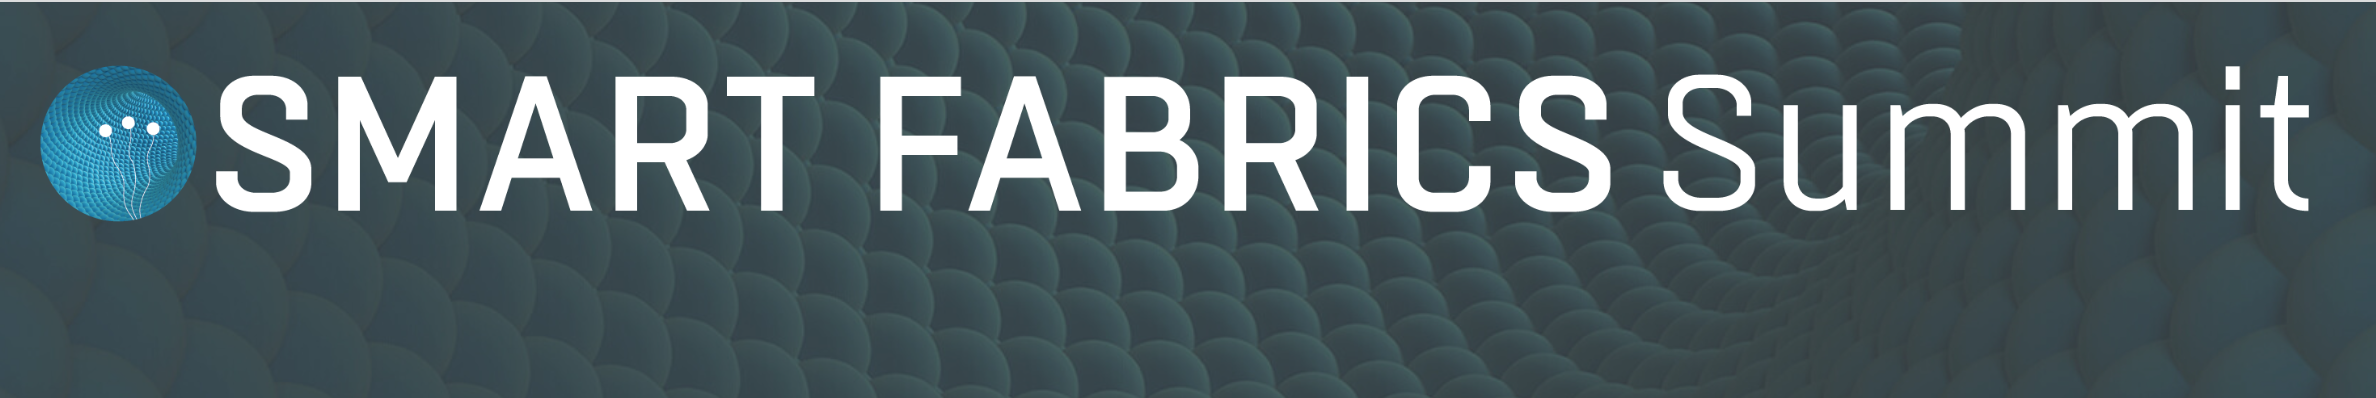 Smart Fabrics Summit Logo